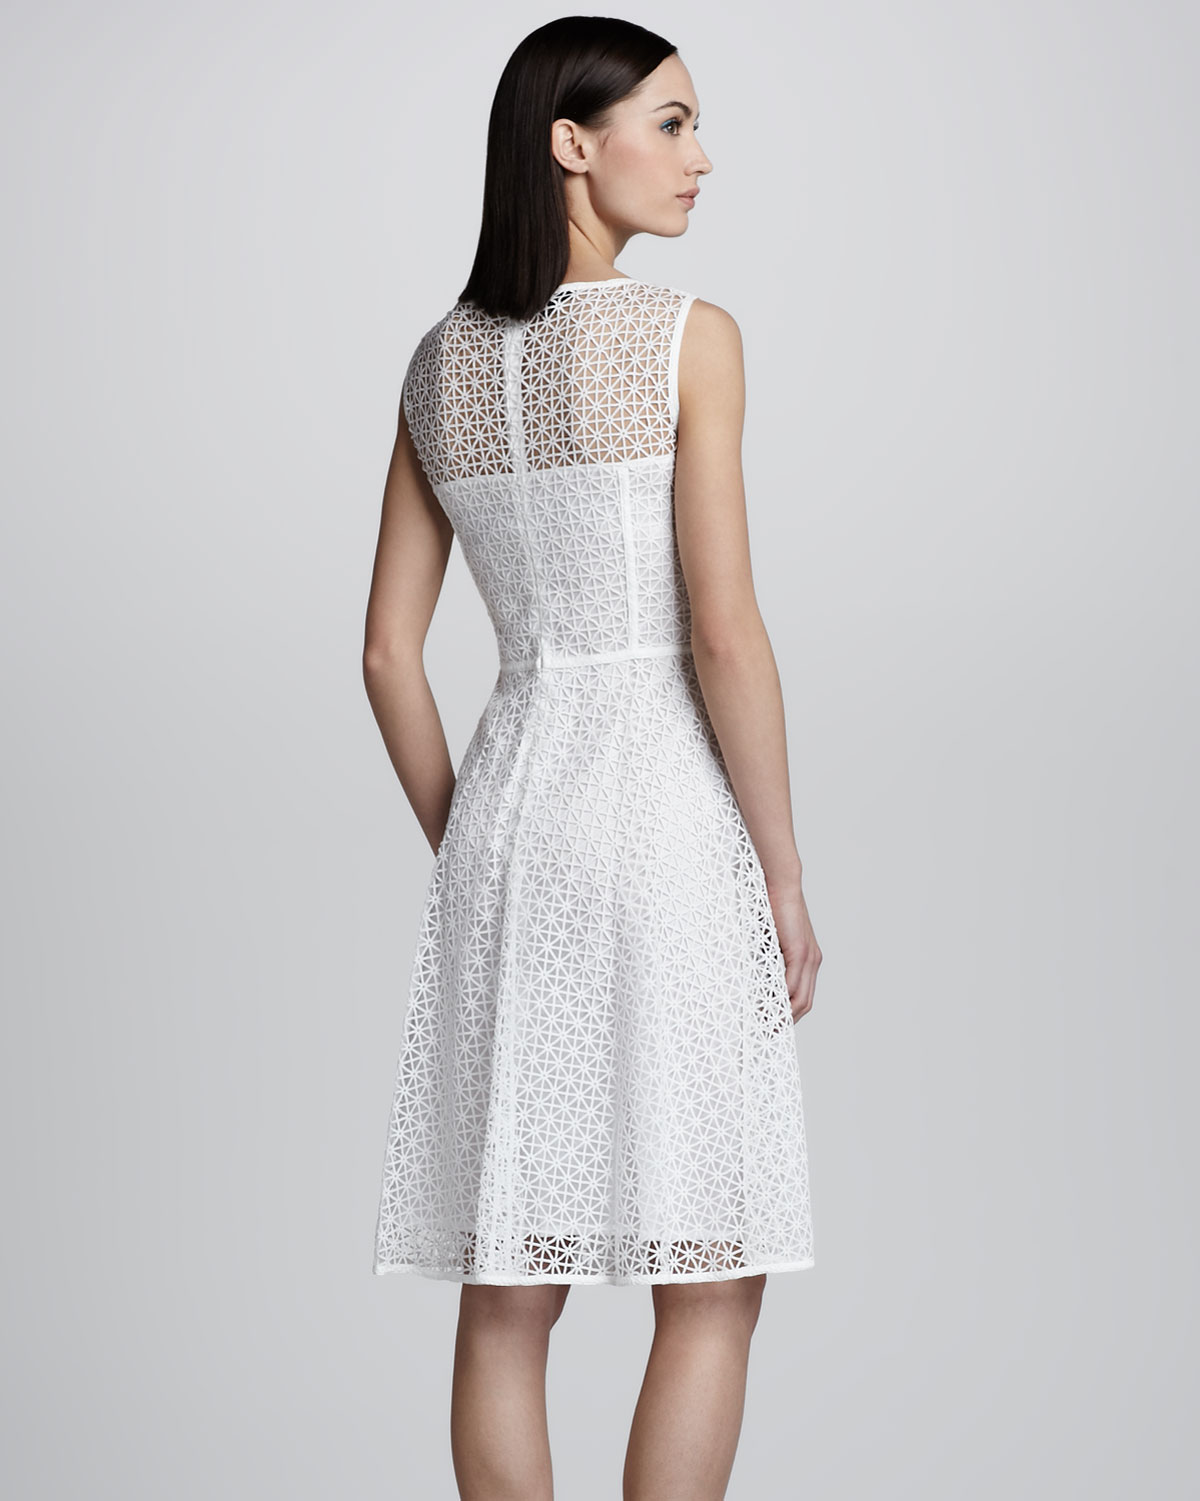 Lyst - Escada Geometric Lace Dress in White